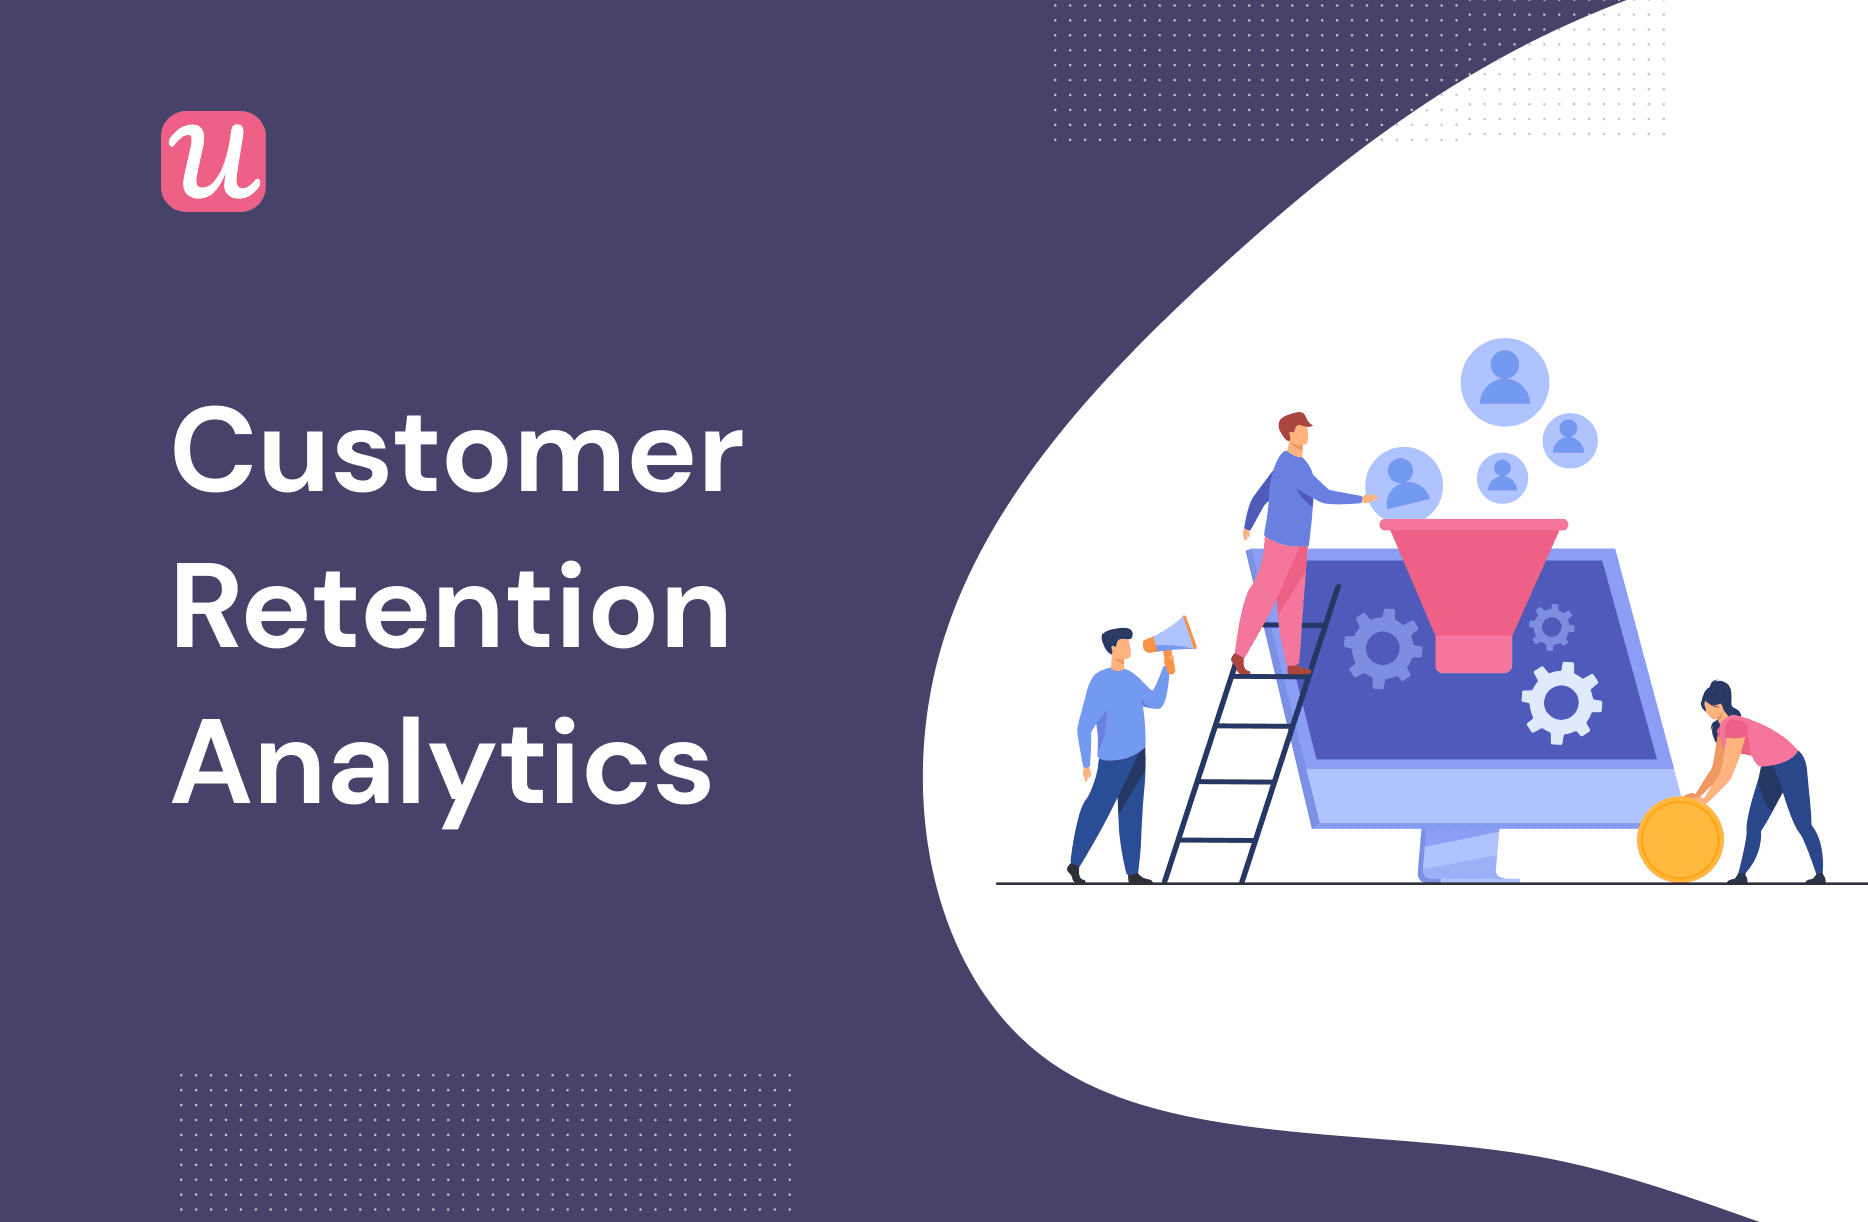 Customer Retention Analytics - The Ultimate Guide